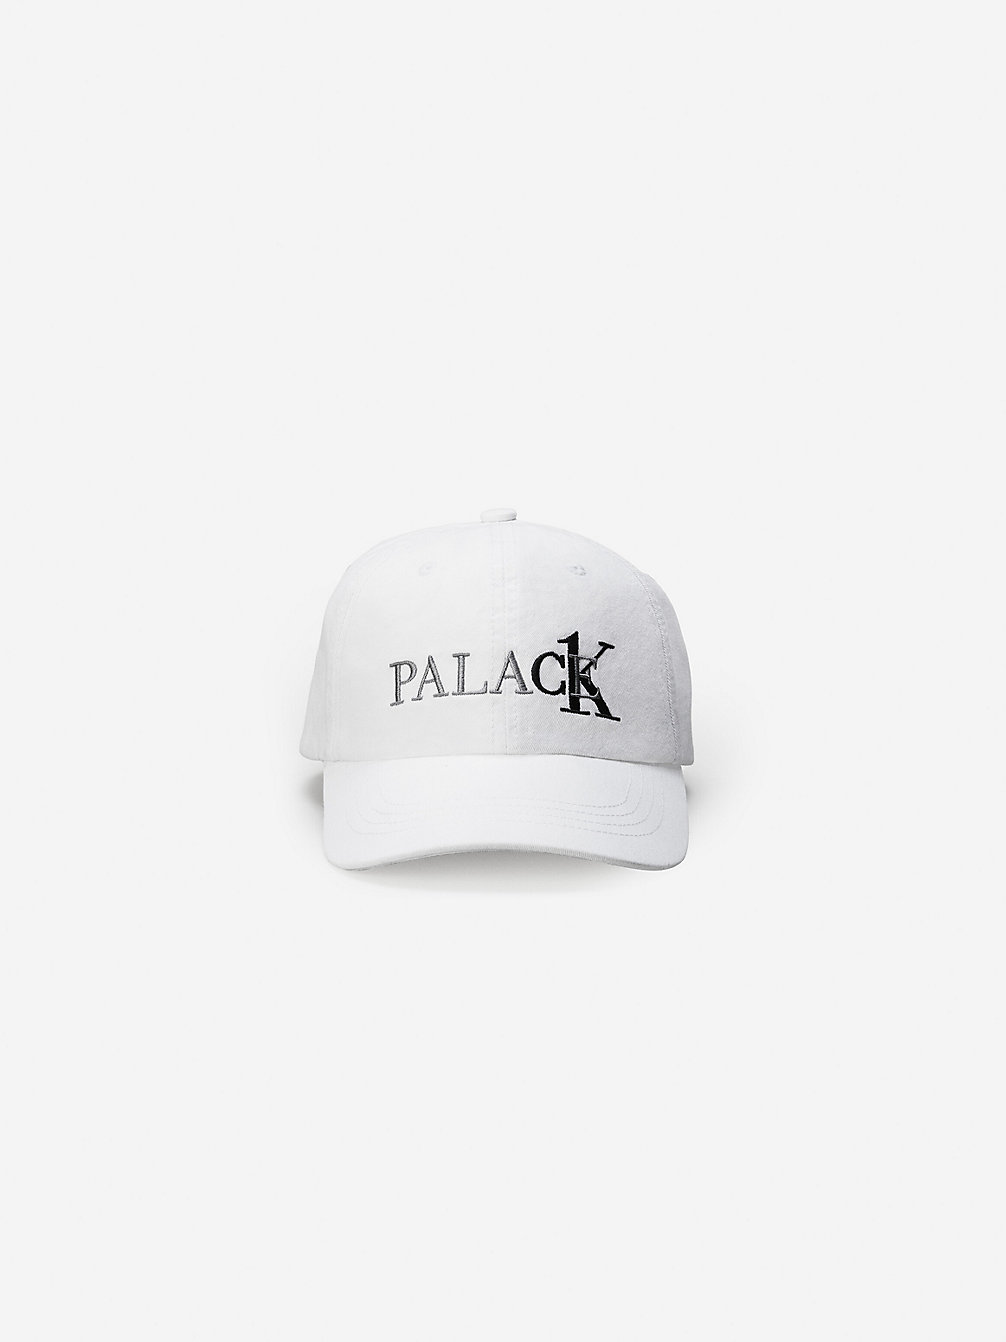 CLASSIC WHITE Cap - Ck1 Palace undefined unisex Calvin Klein